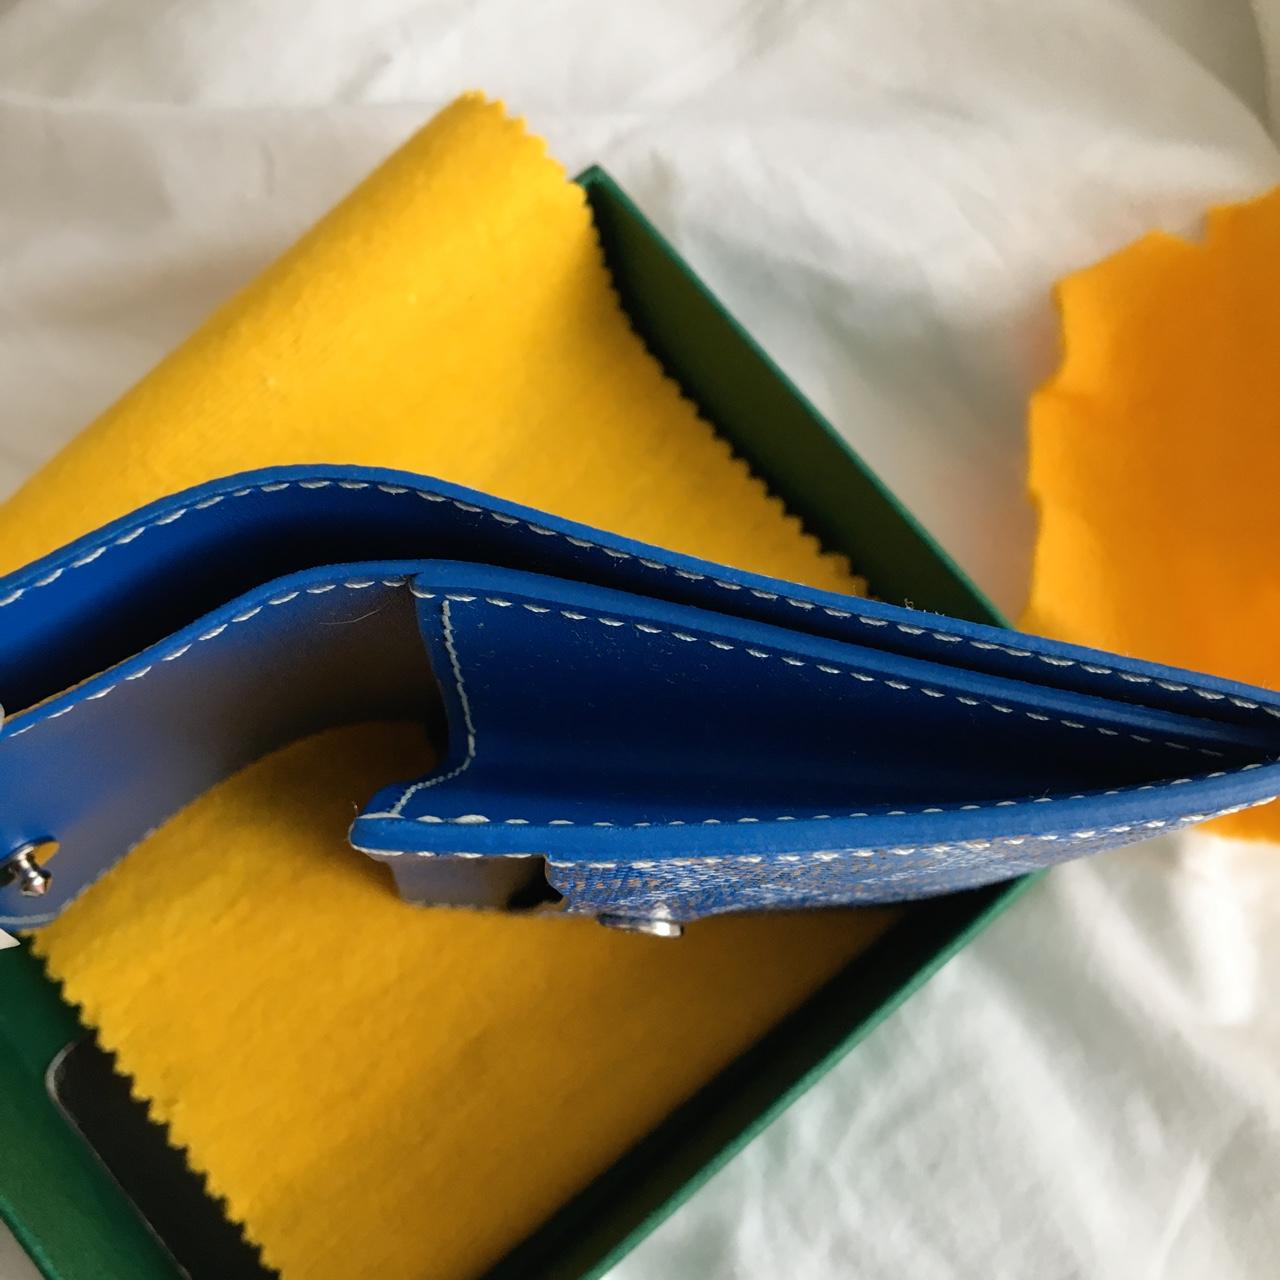 Goyard 'Navy Blue' Saint-Sulpice card wallet Only - Depop